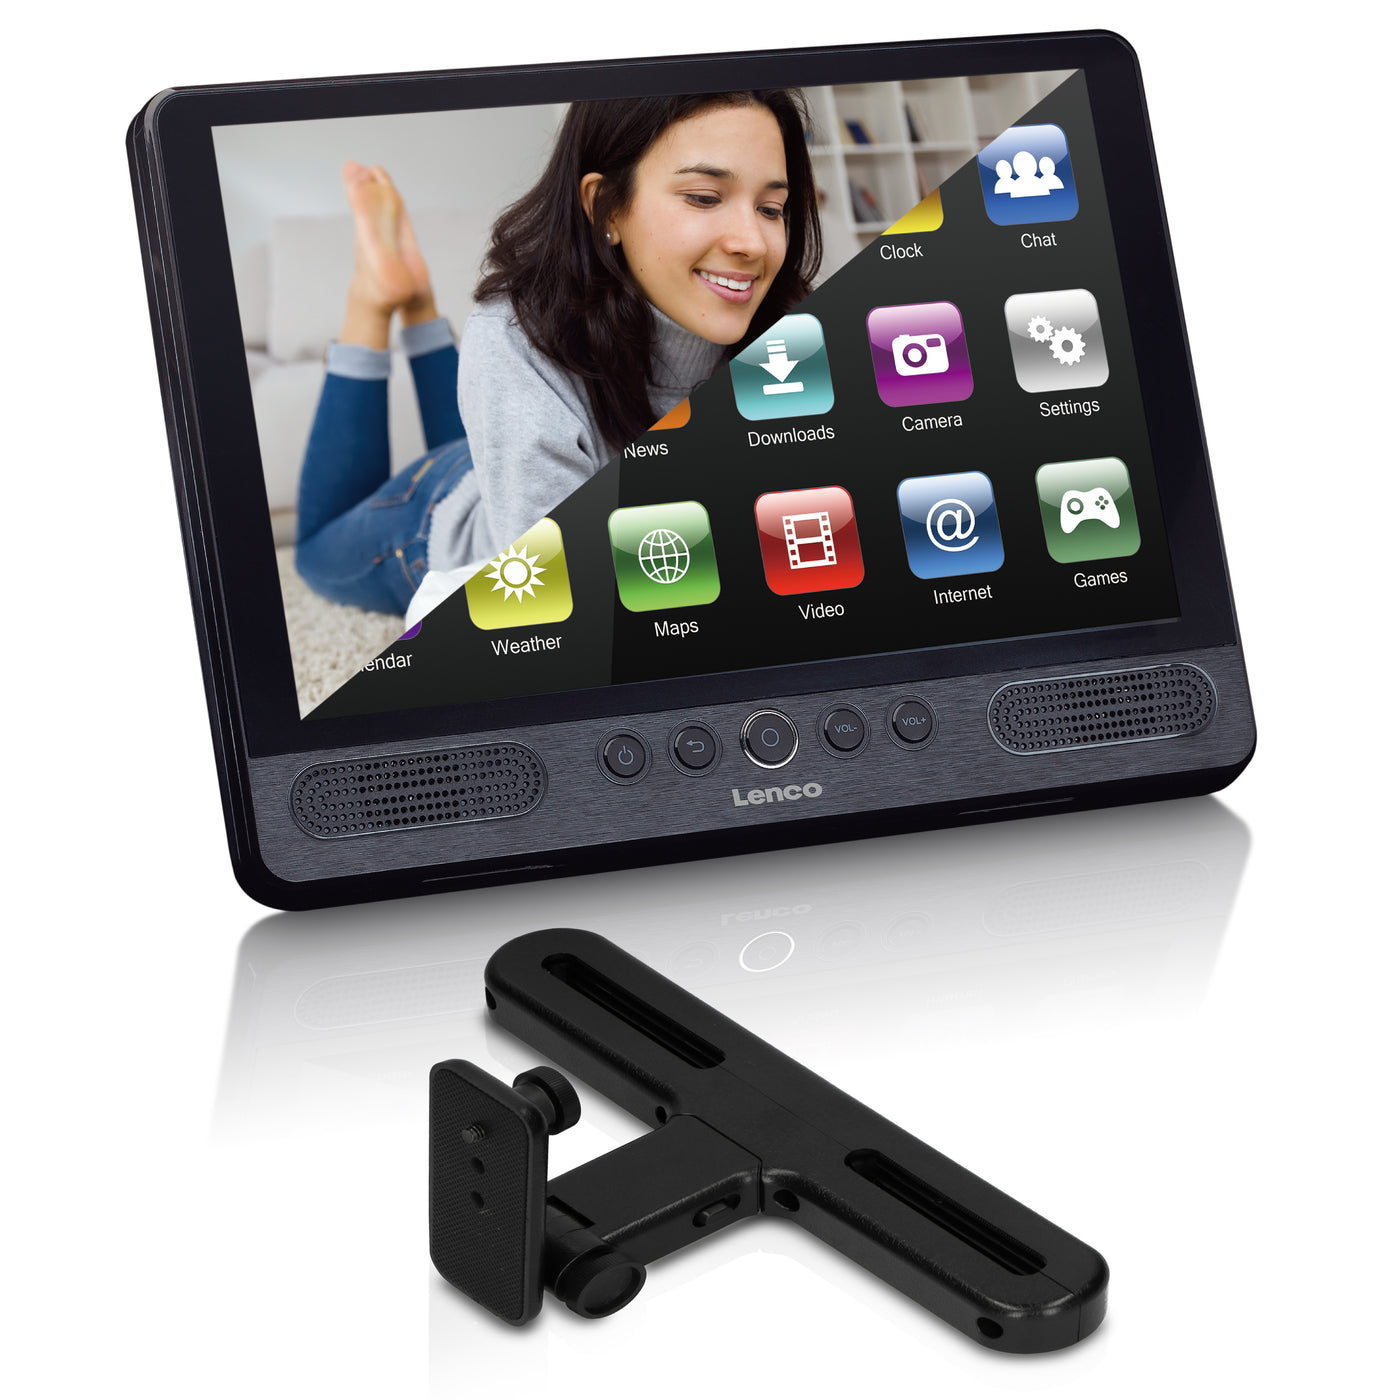 LENCO TDV1001BK - Tablet - - WIFI Portable -Catalog Android USB Lenco player – - DVD